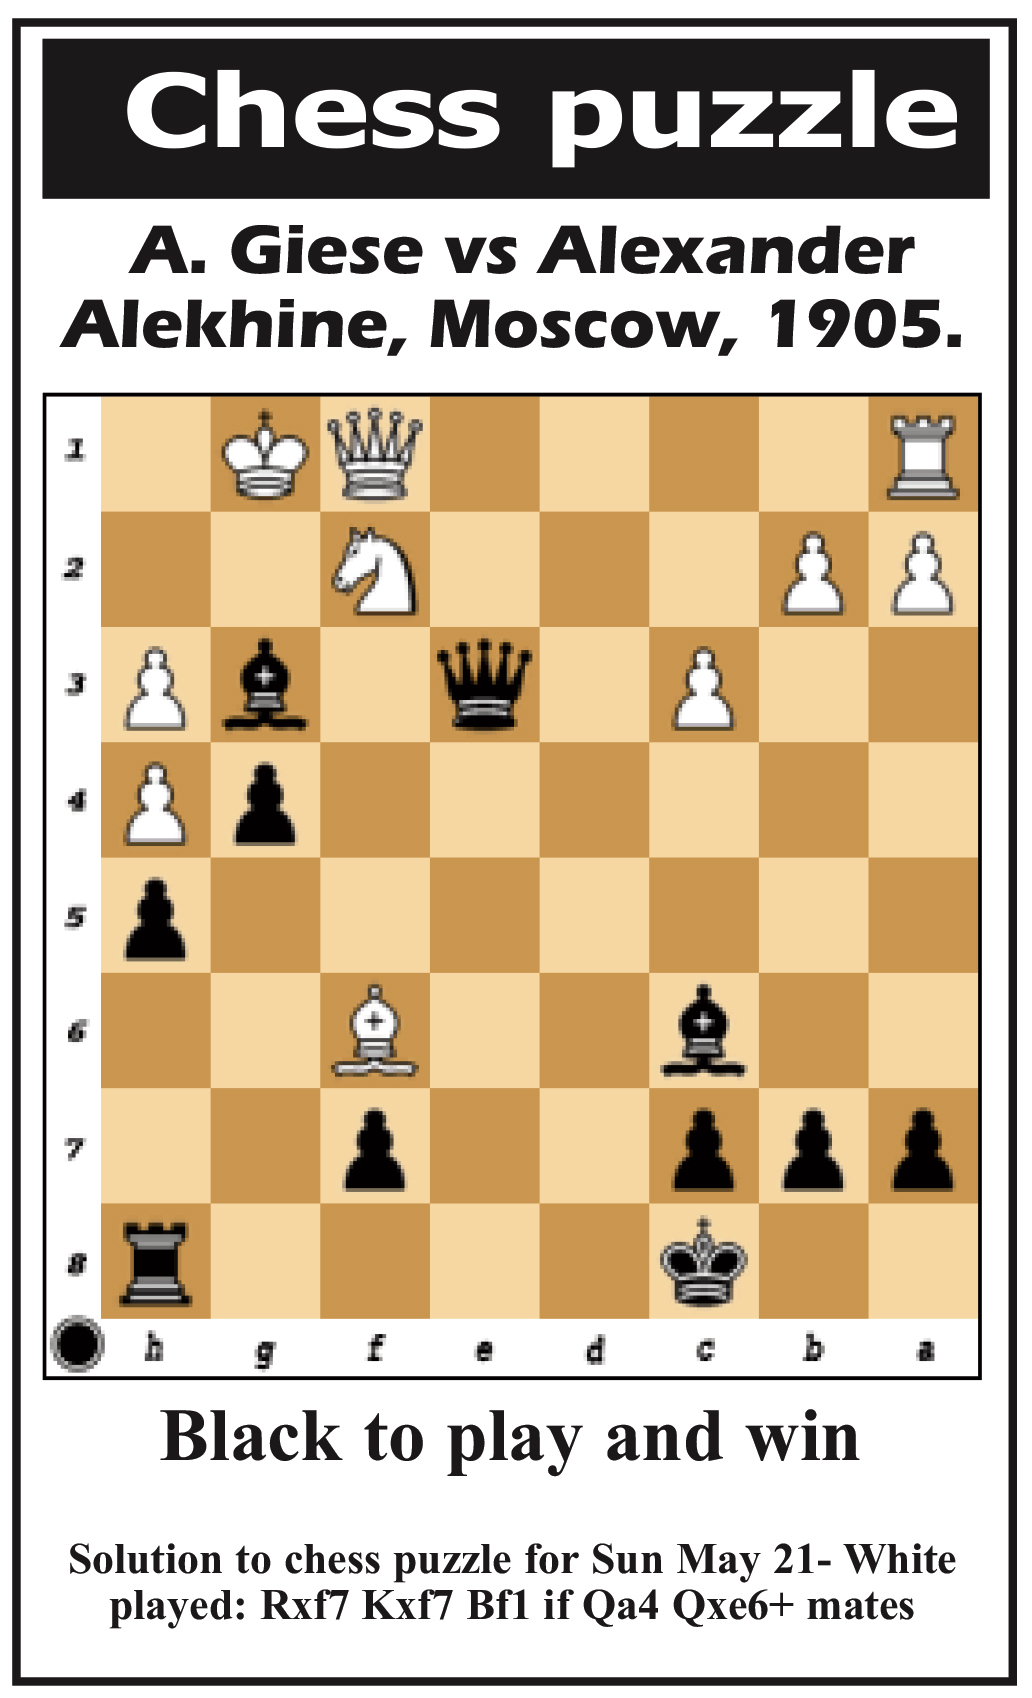 International Chess Federation on X: Alexander Alekhine, the